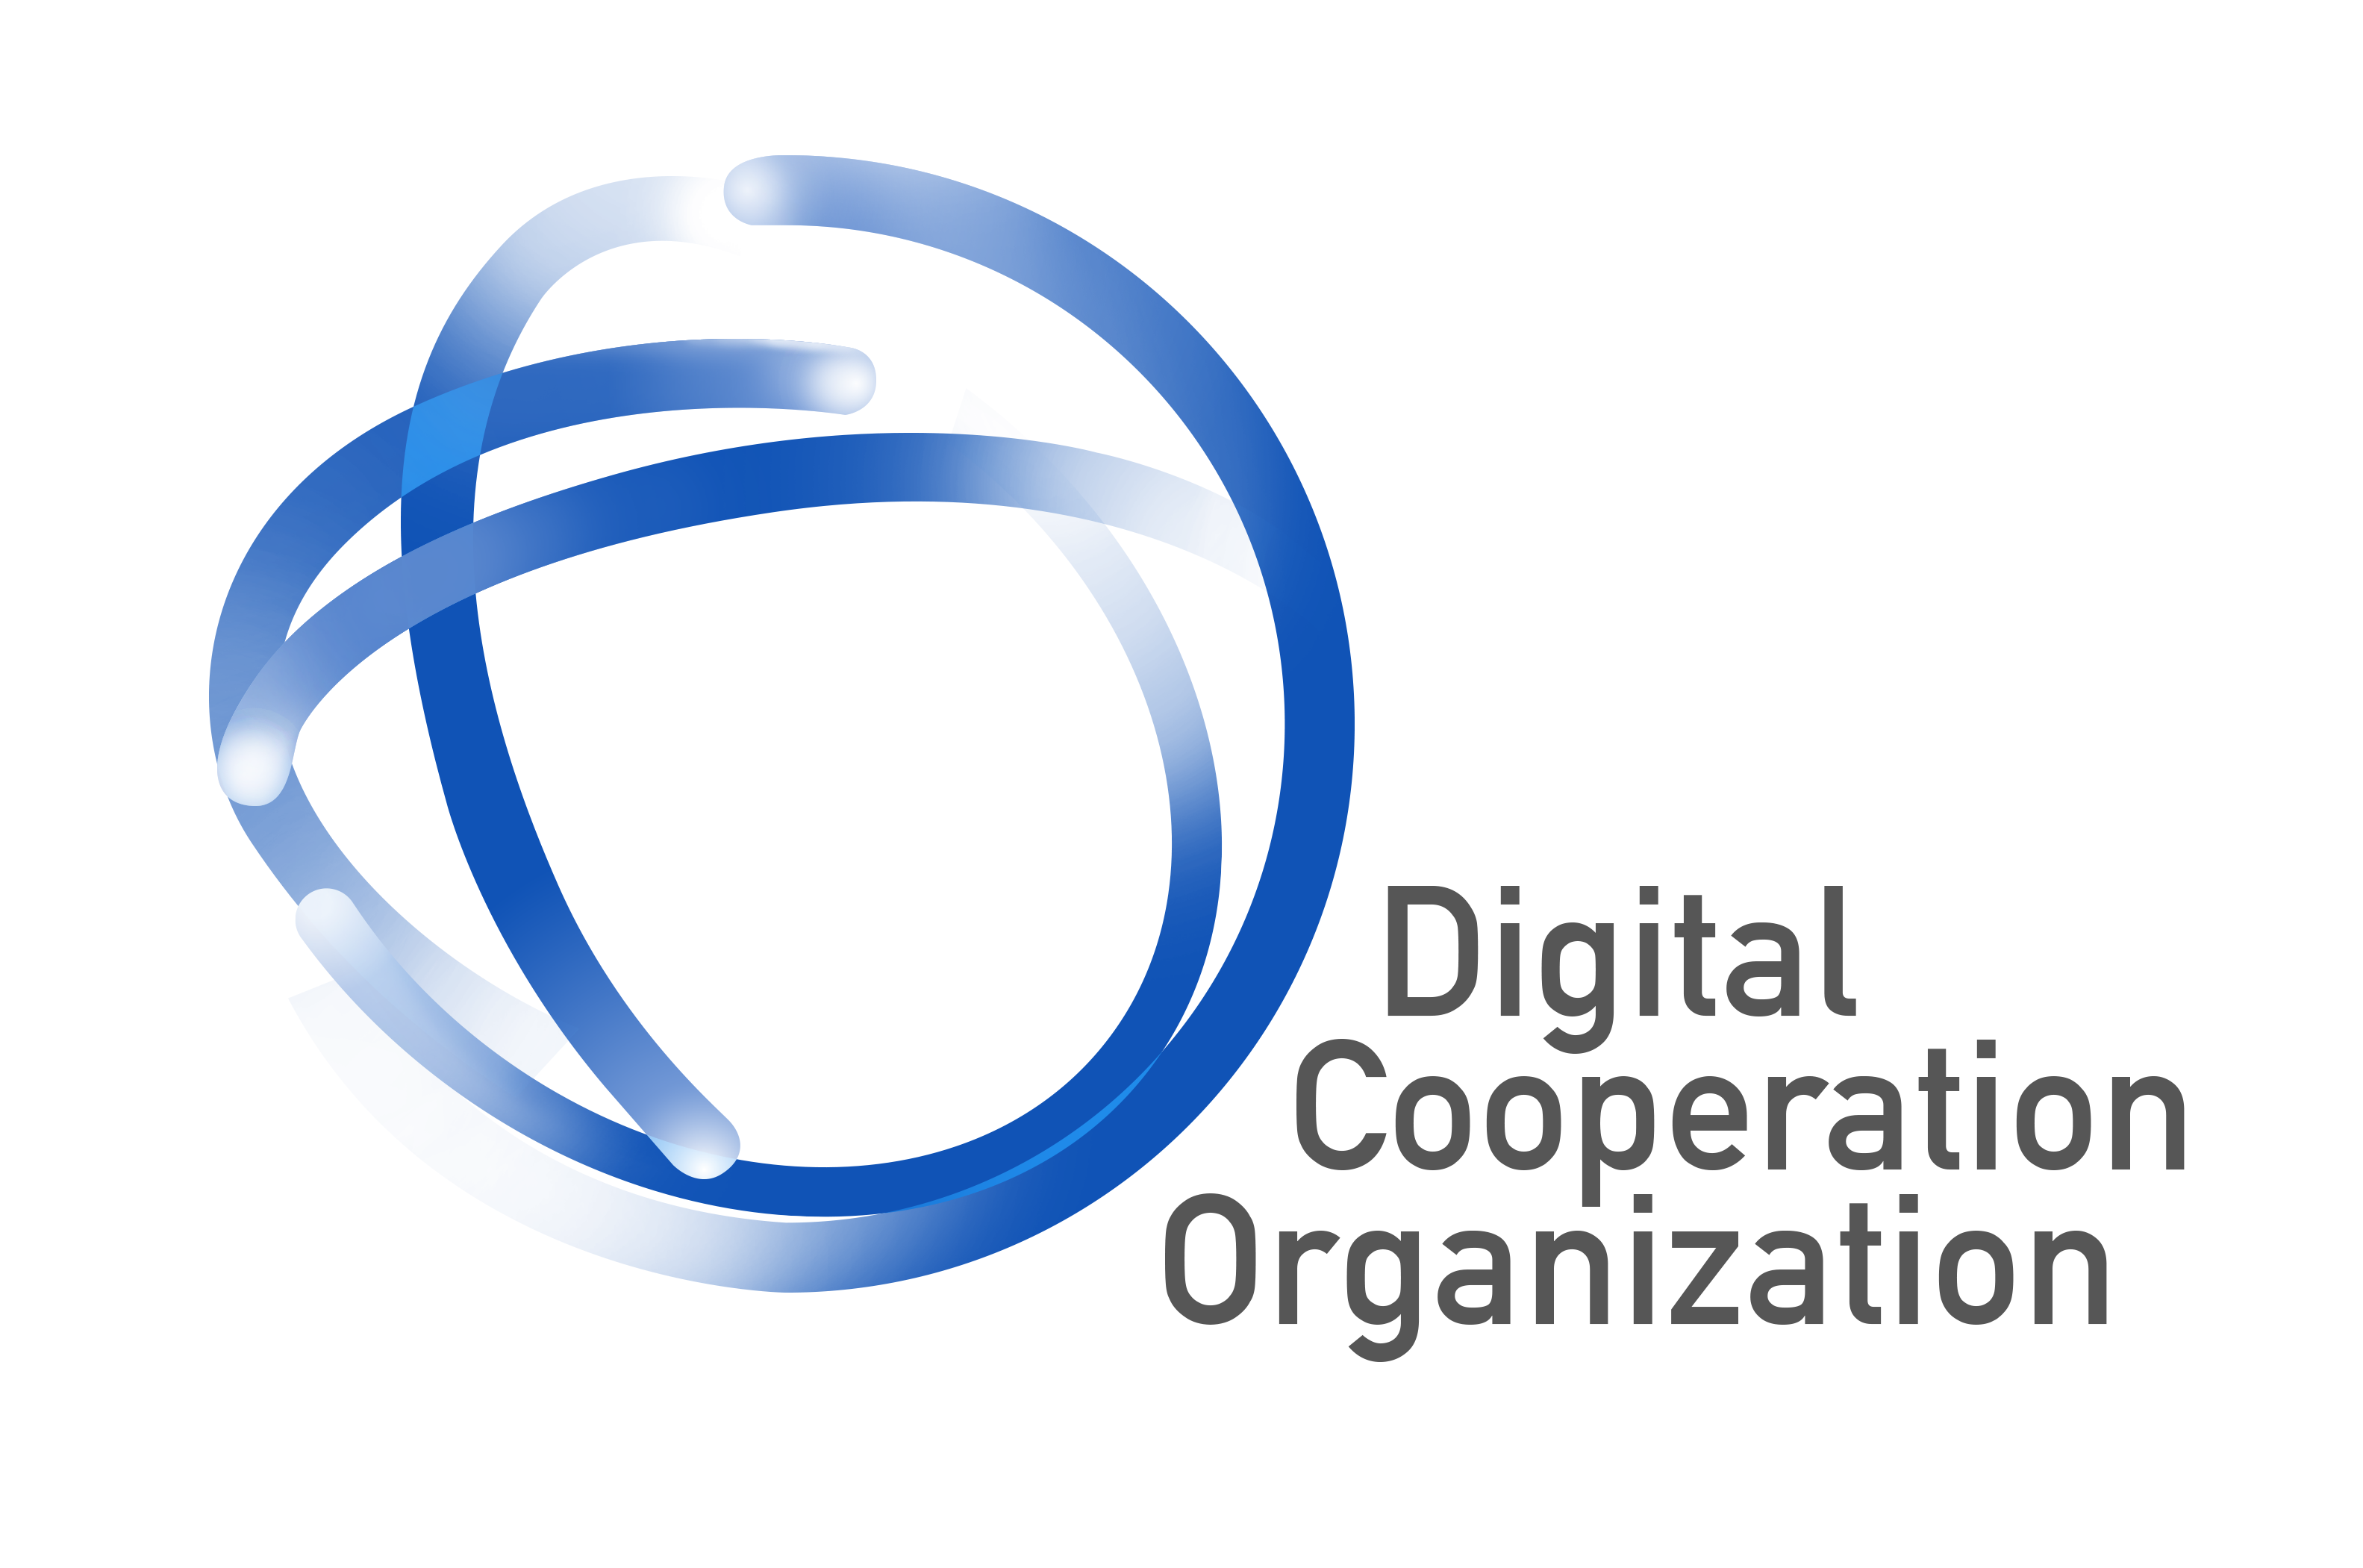 Digital Cooperation Organization (DCO)